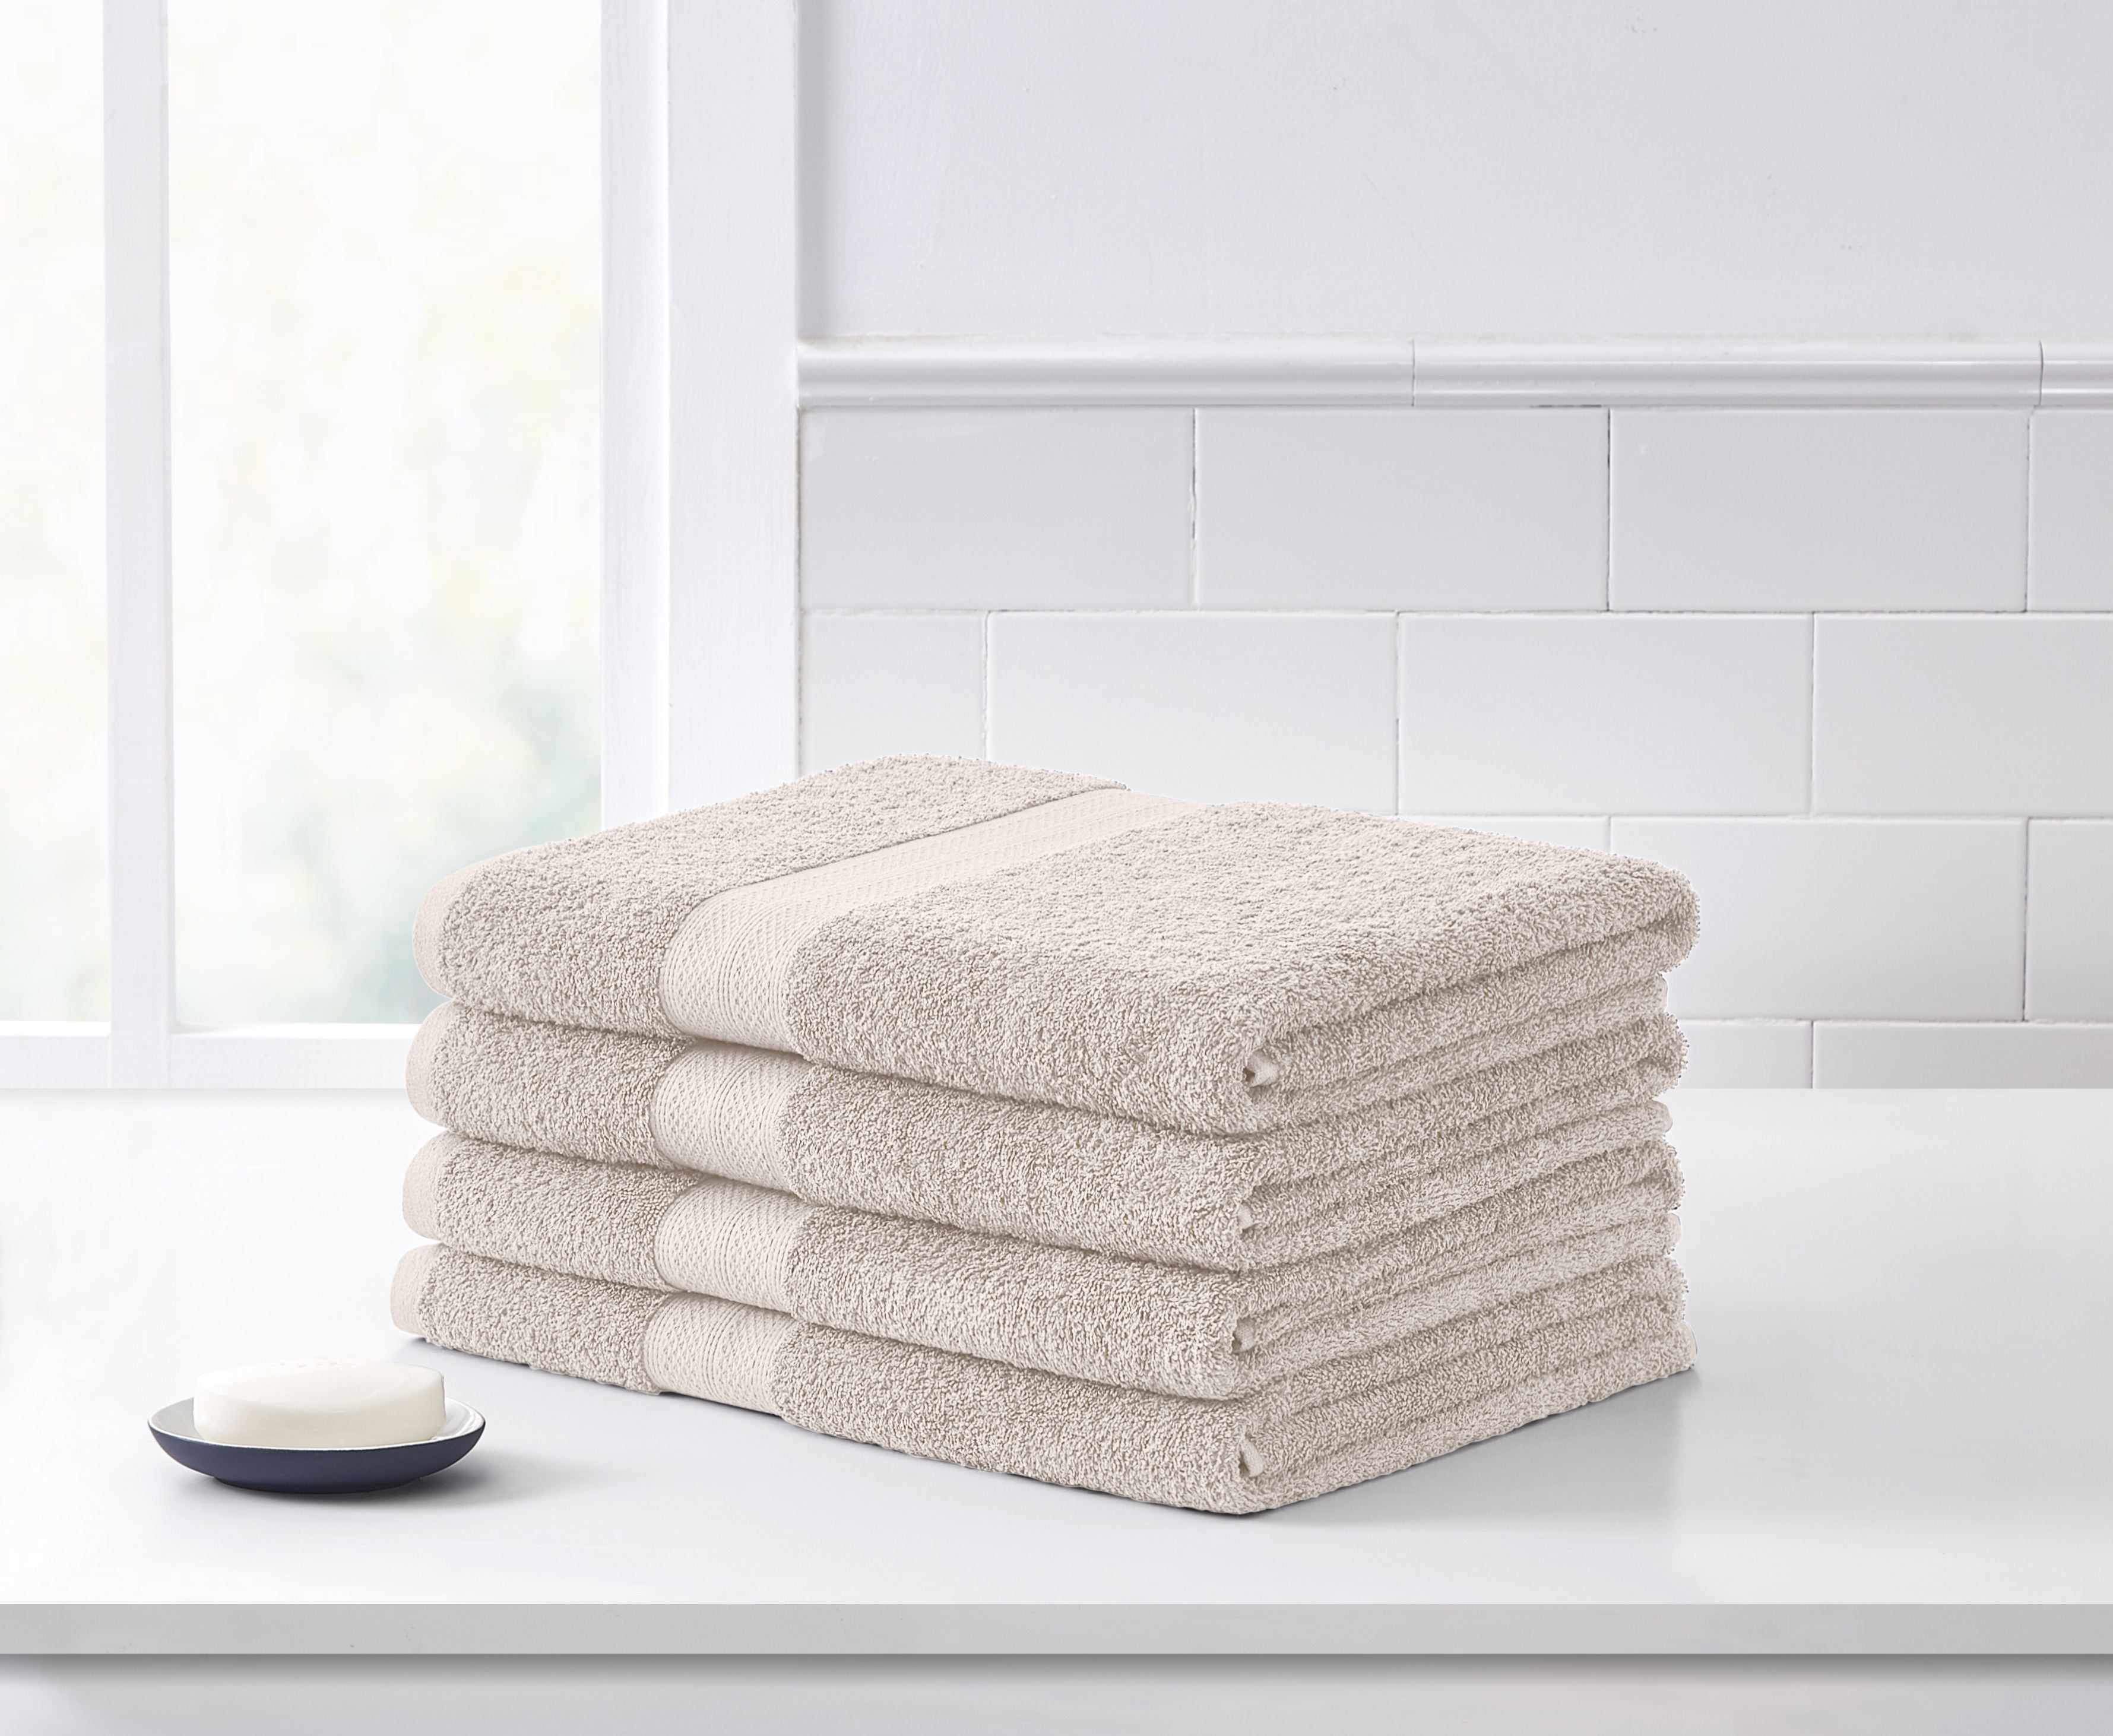 VCNY Home Essex 4Piece Cotton Bath Sheet Towel Set, 35 x 66, Ivory